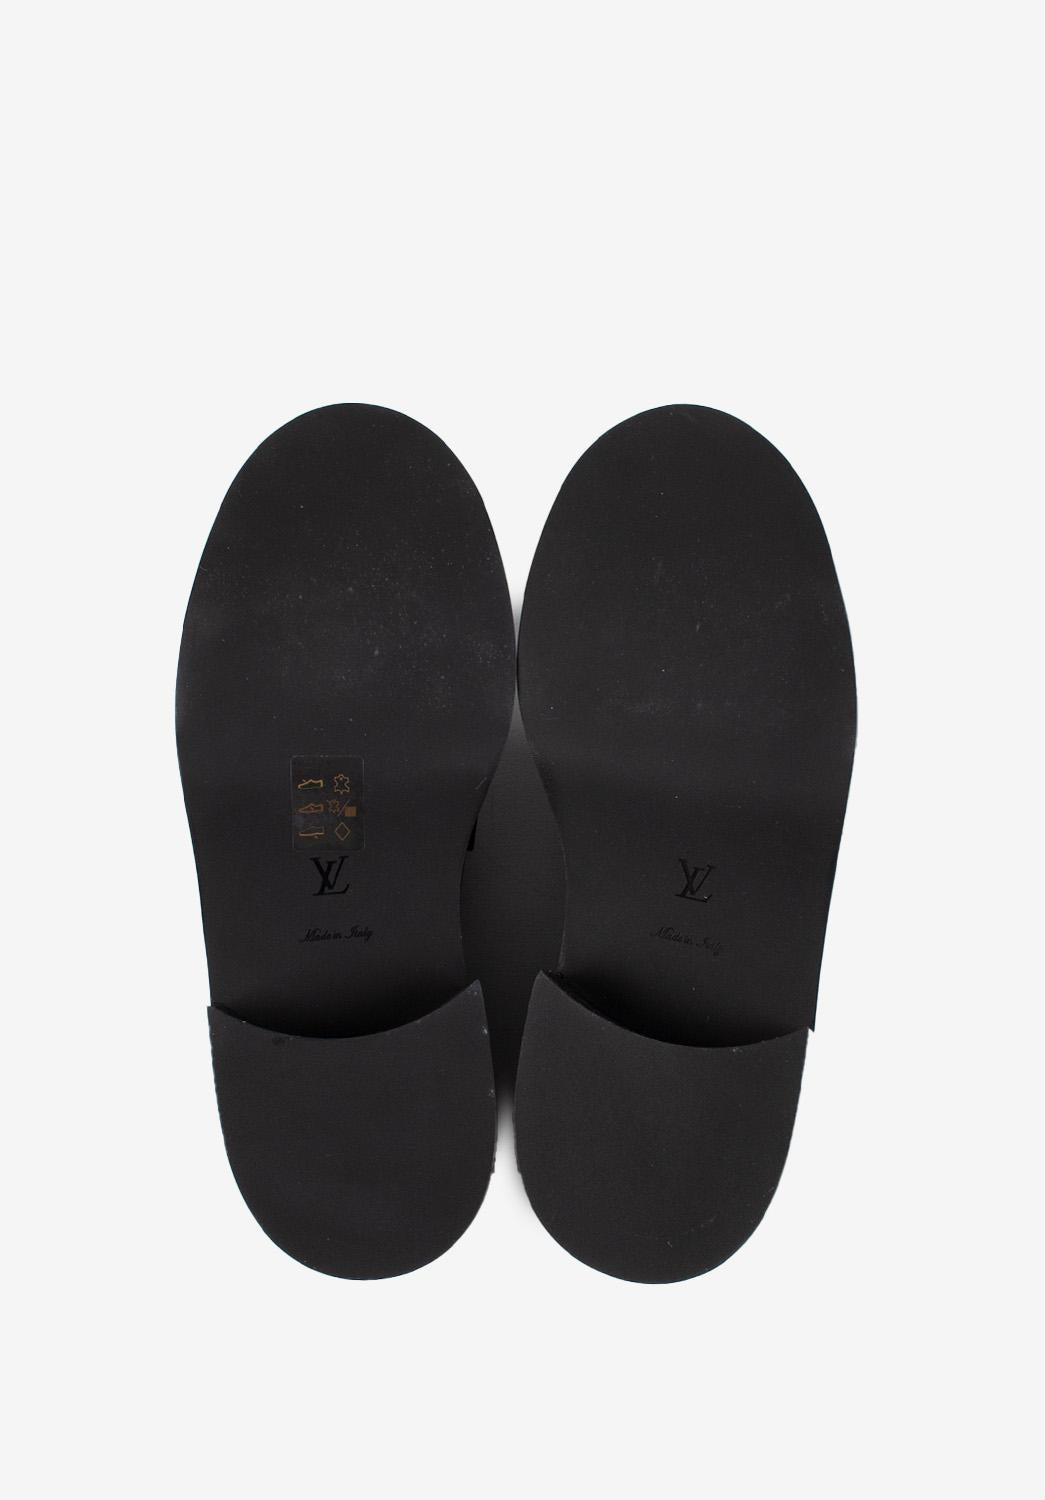 Louis Vuitton Loafers Leather Woman Shoes Flats Size EUR 38 ½, S121 2